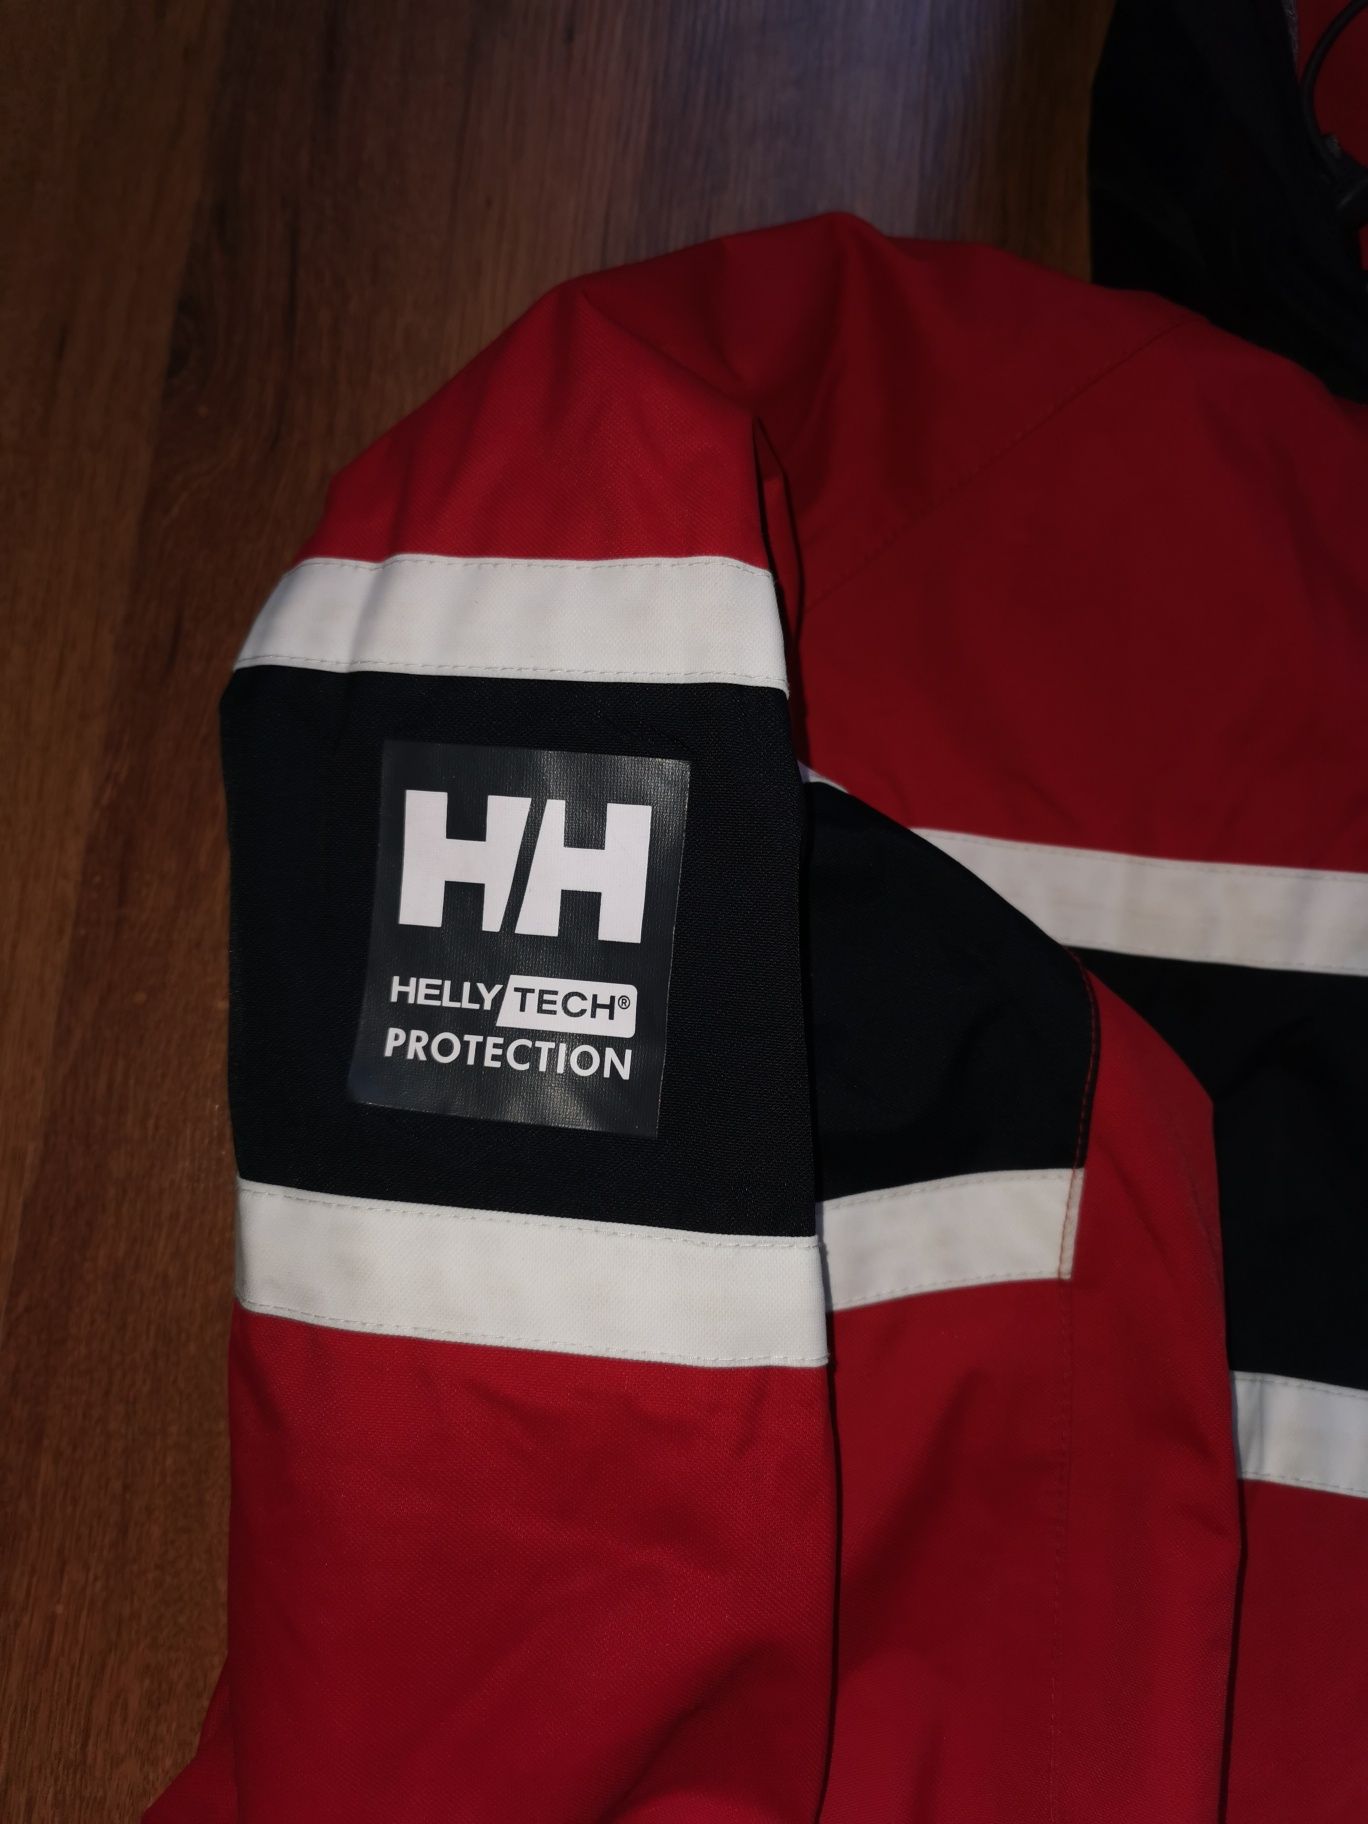 Helly Hansen Salt Helly Tech Protection profesjonalny sztormiak kurtka